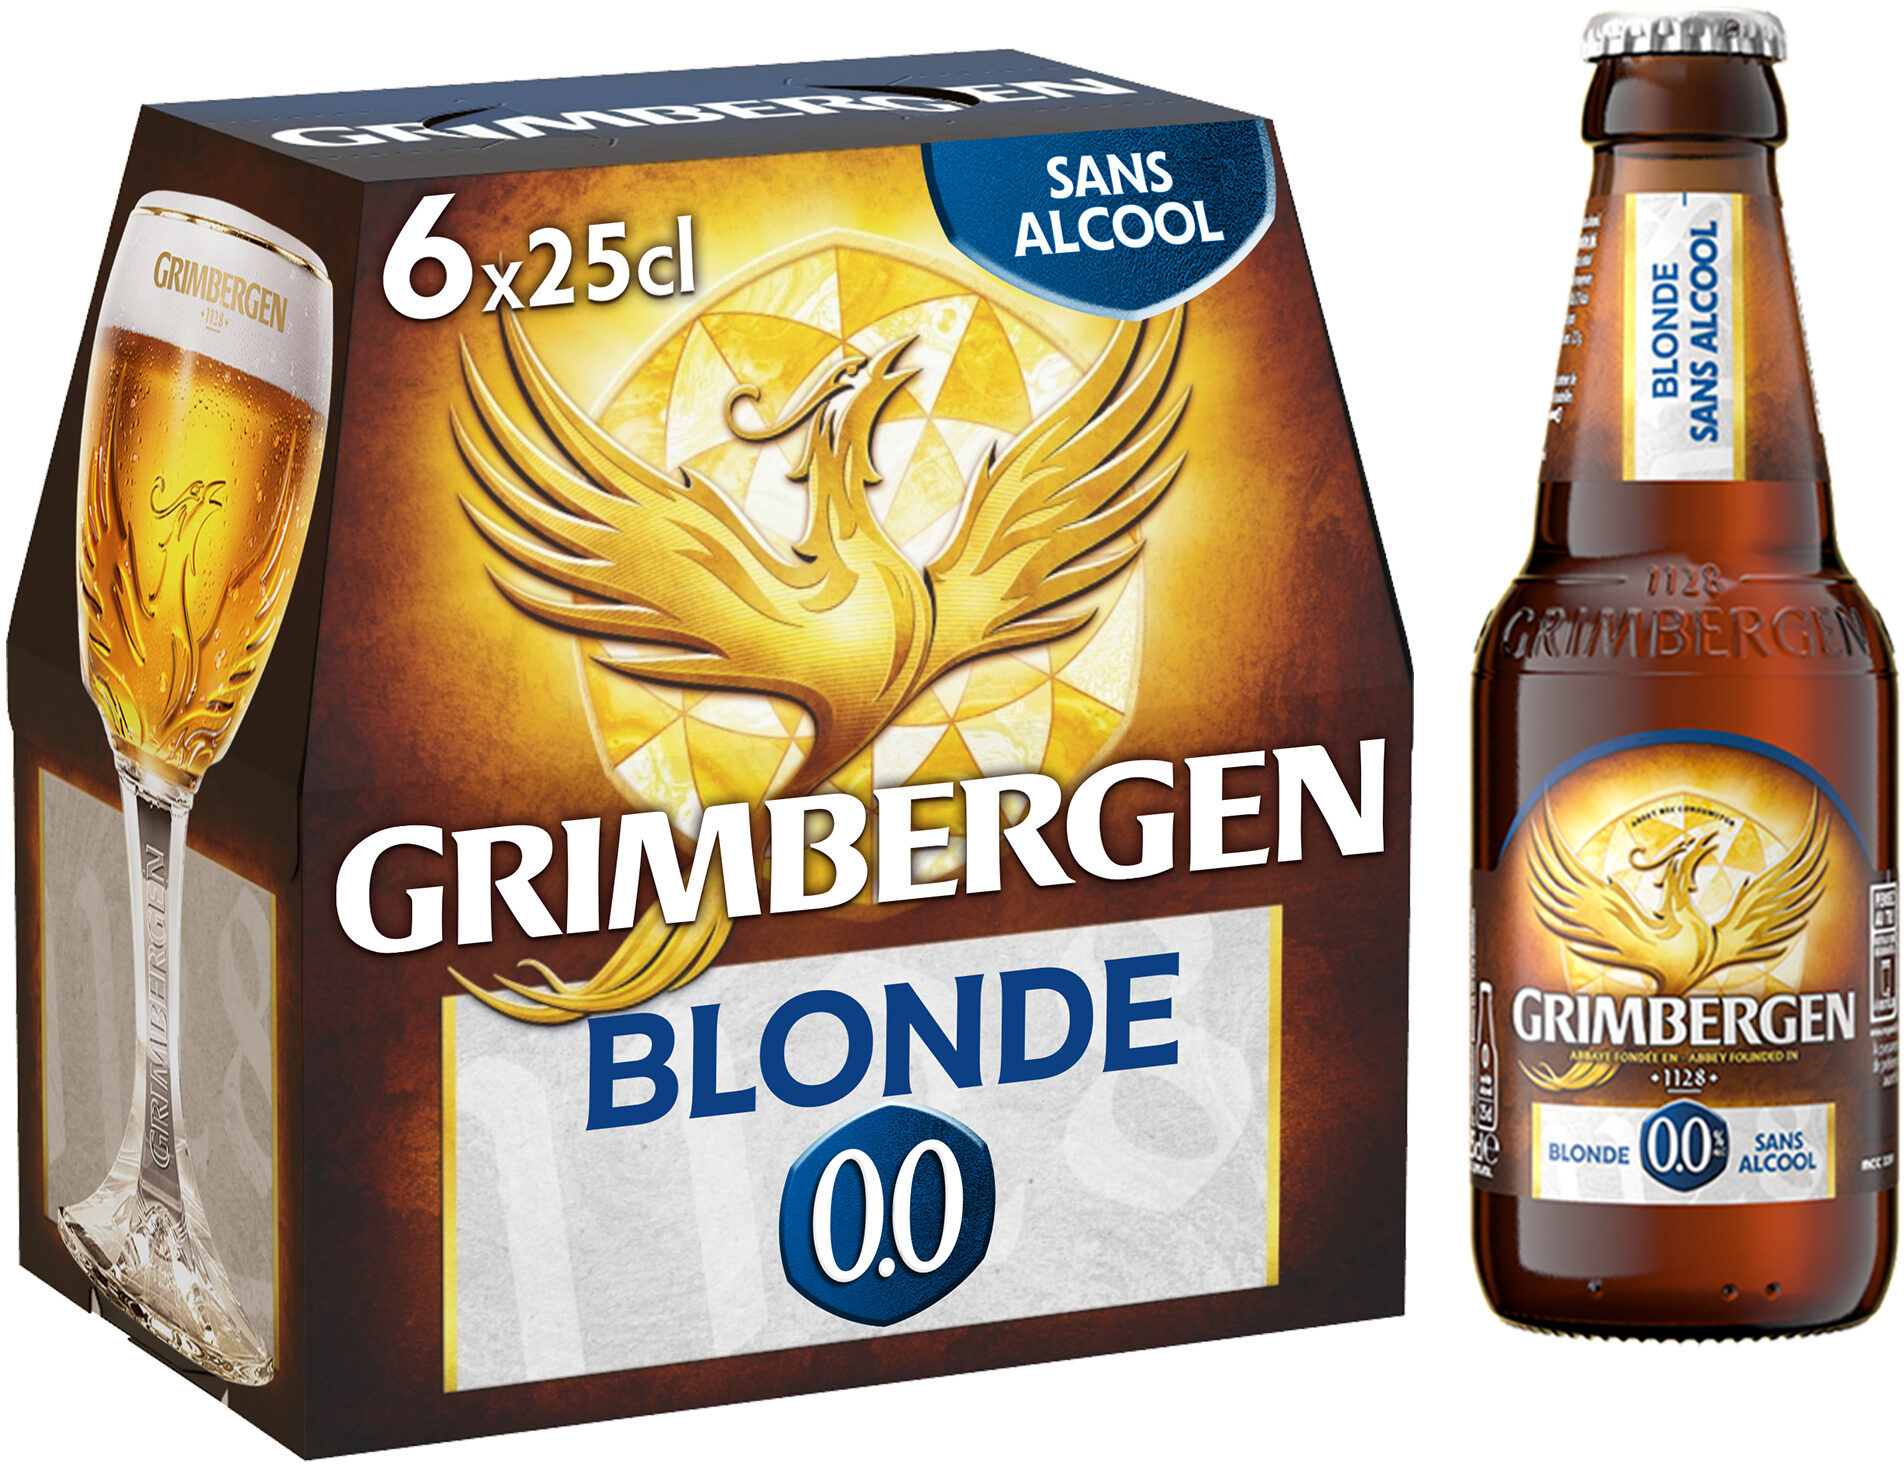 Grimbergen Bière d'Abbaye 6X0,25 BOT GRIMBERGEN 0.0% 0.0 DEGRE ALCOOL - Product - fr